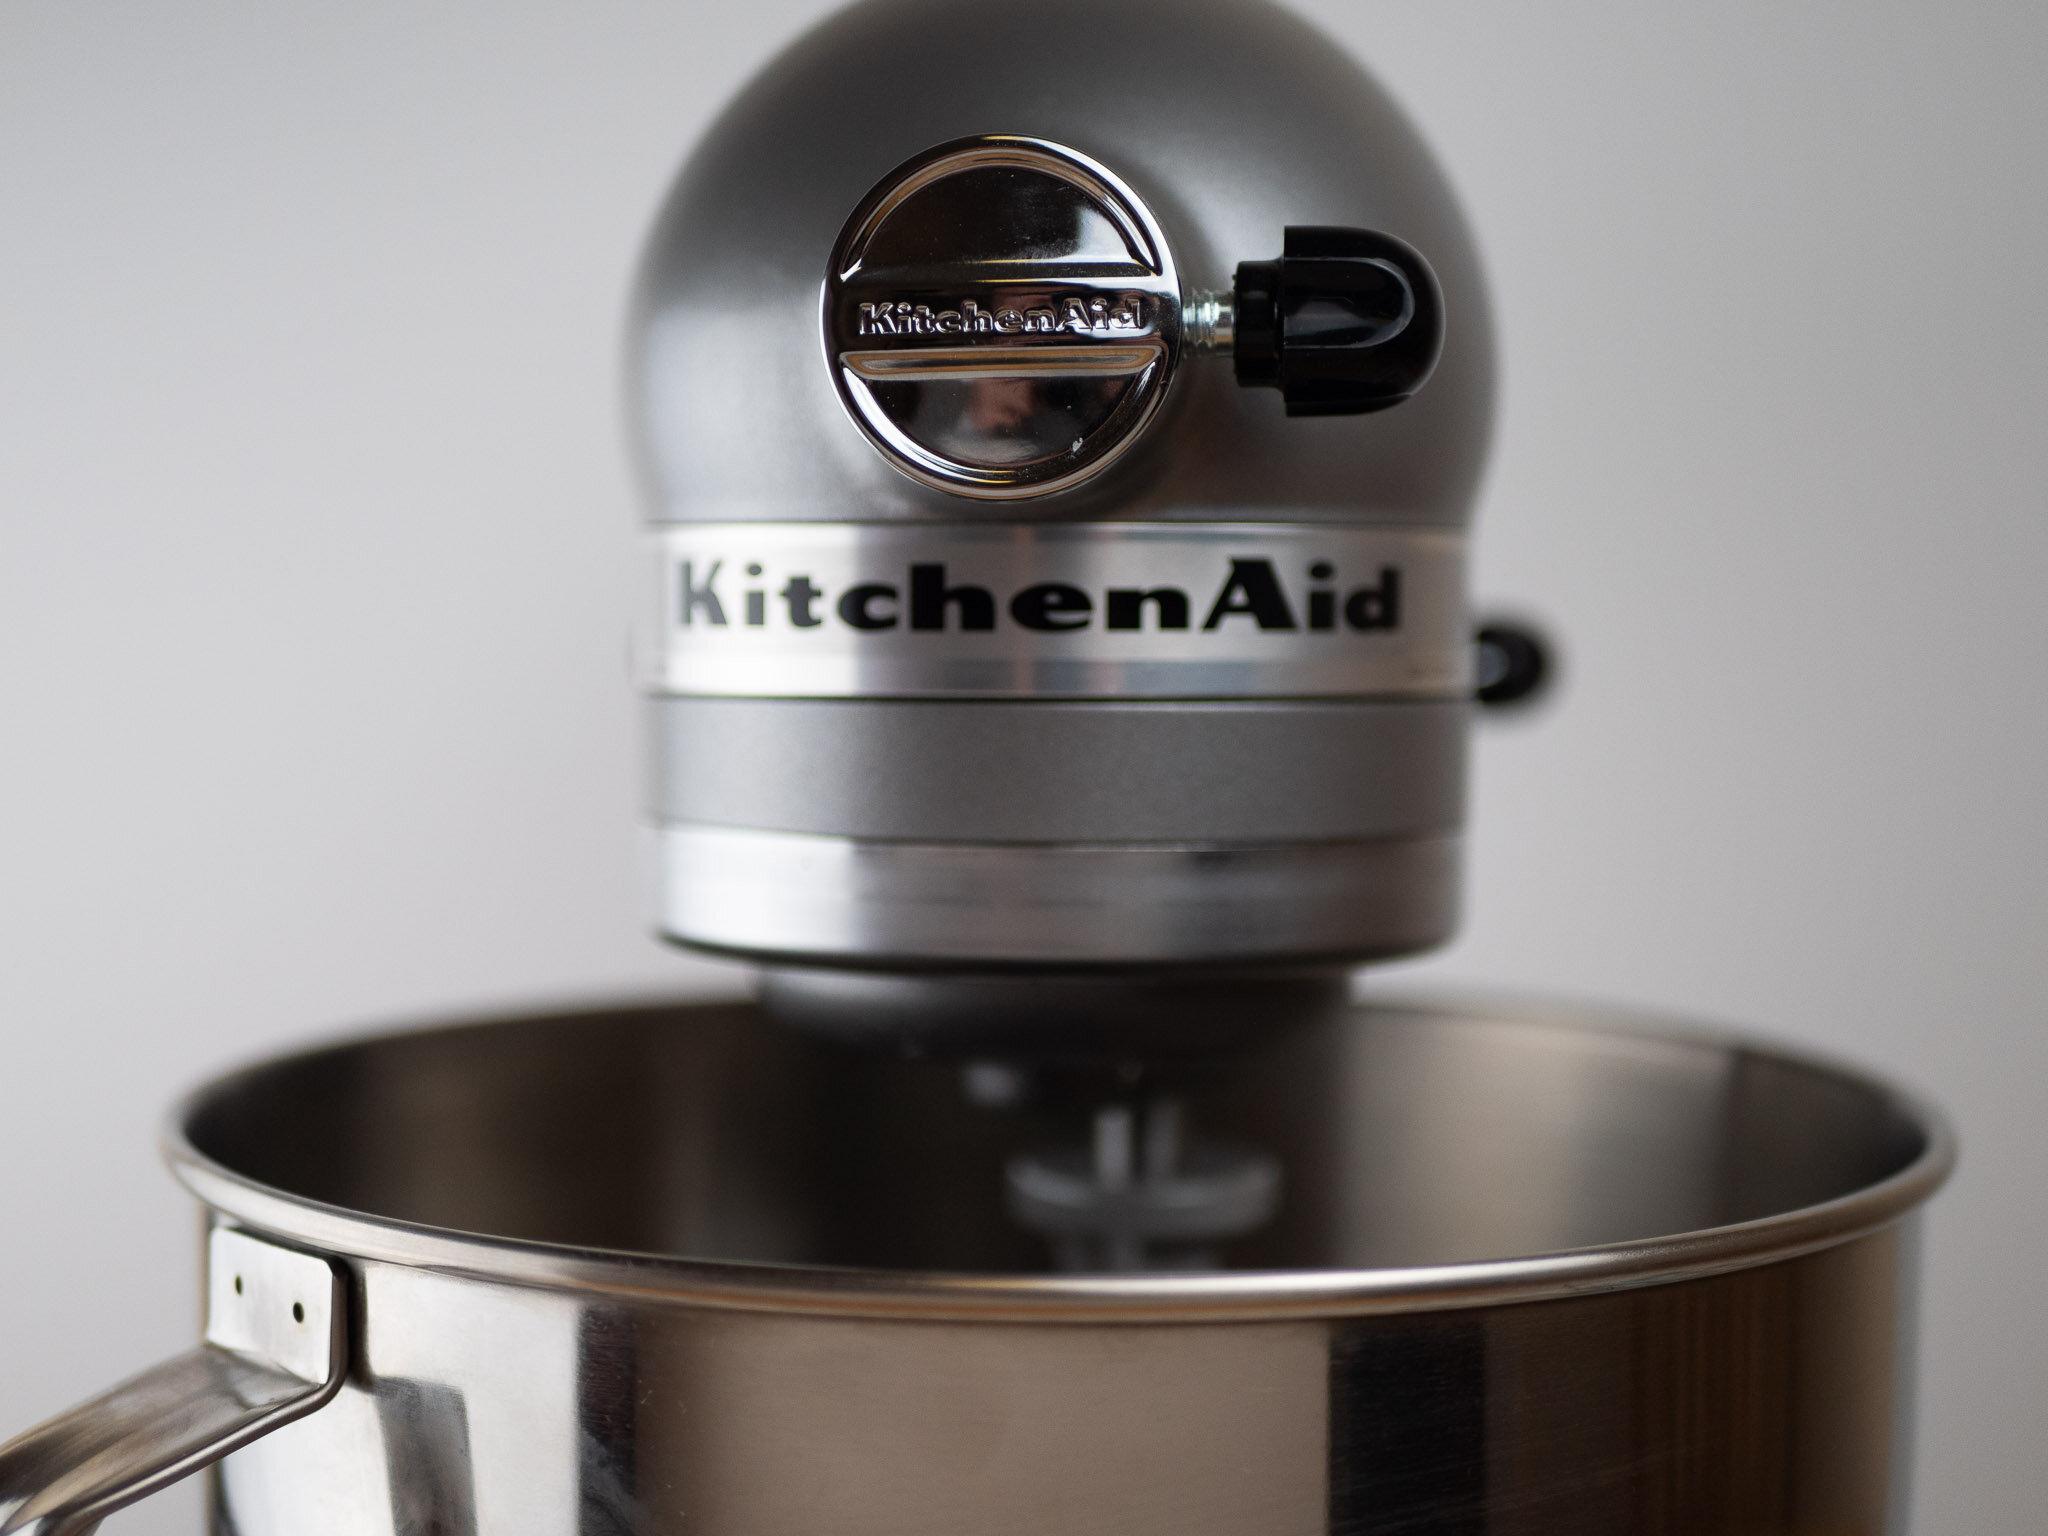 Refurbished KitchenAid Mixer Review — BATTER & CAKE CRUMBS